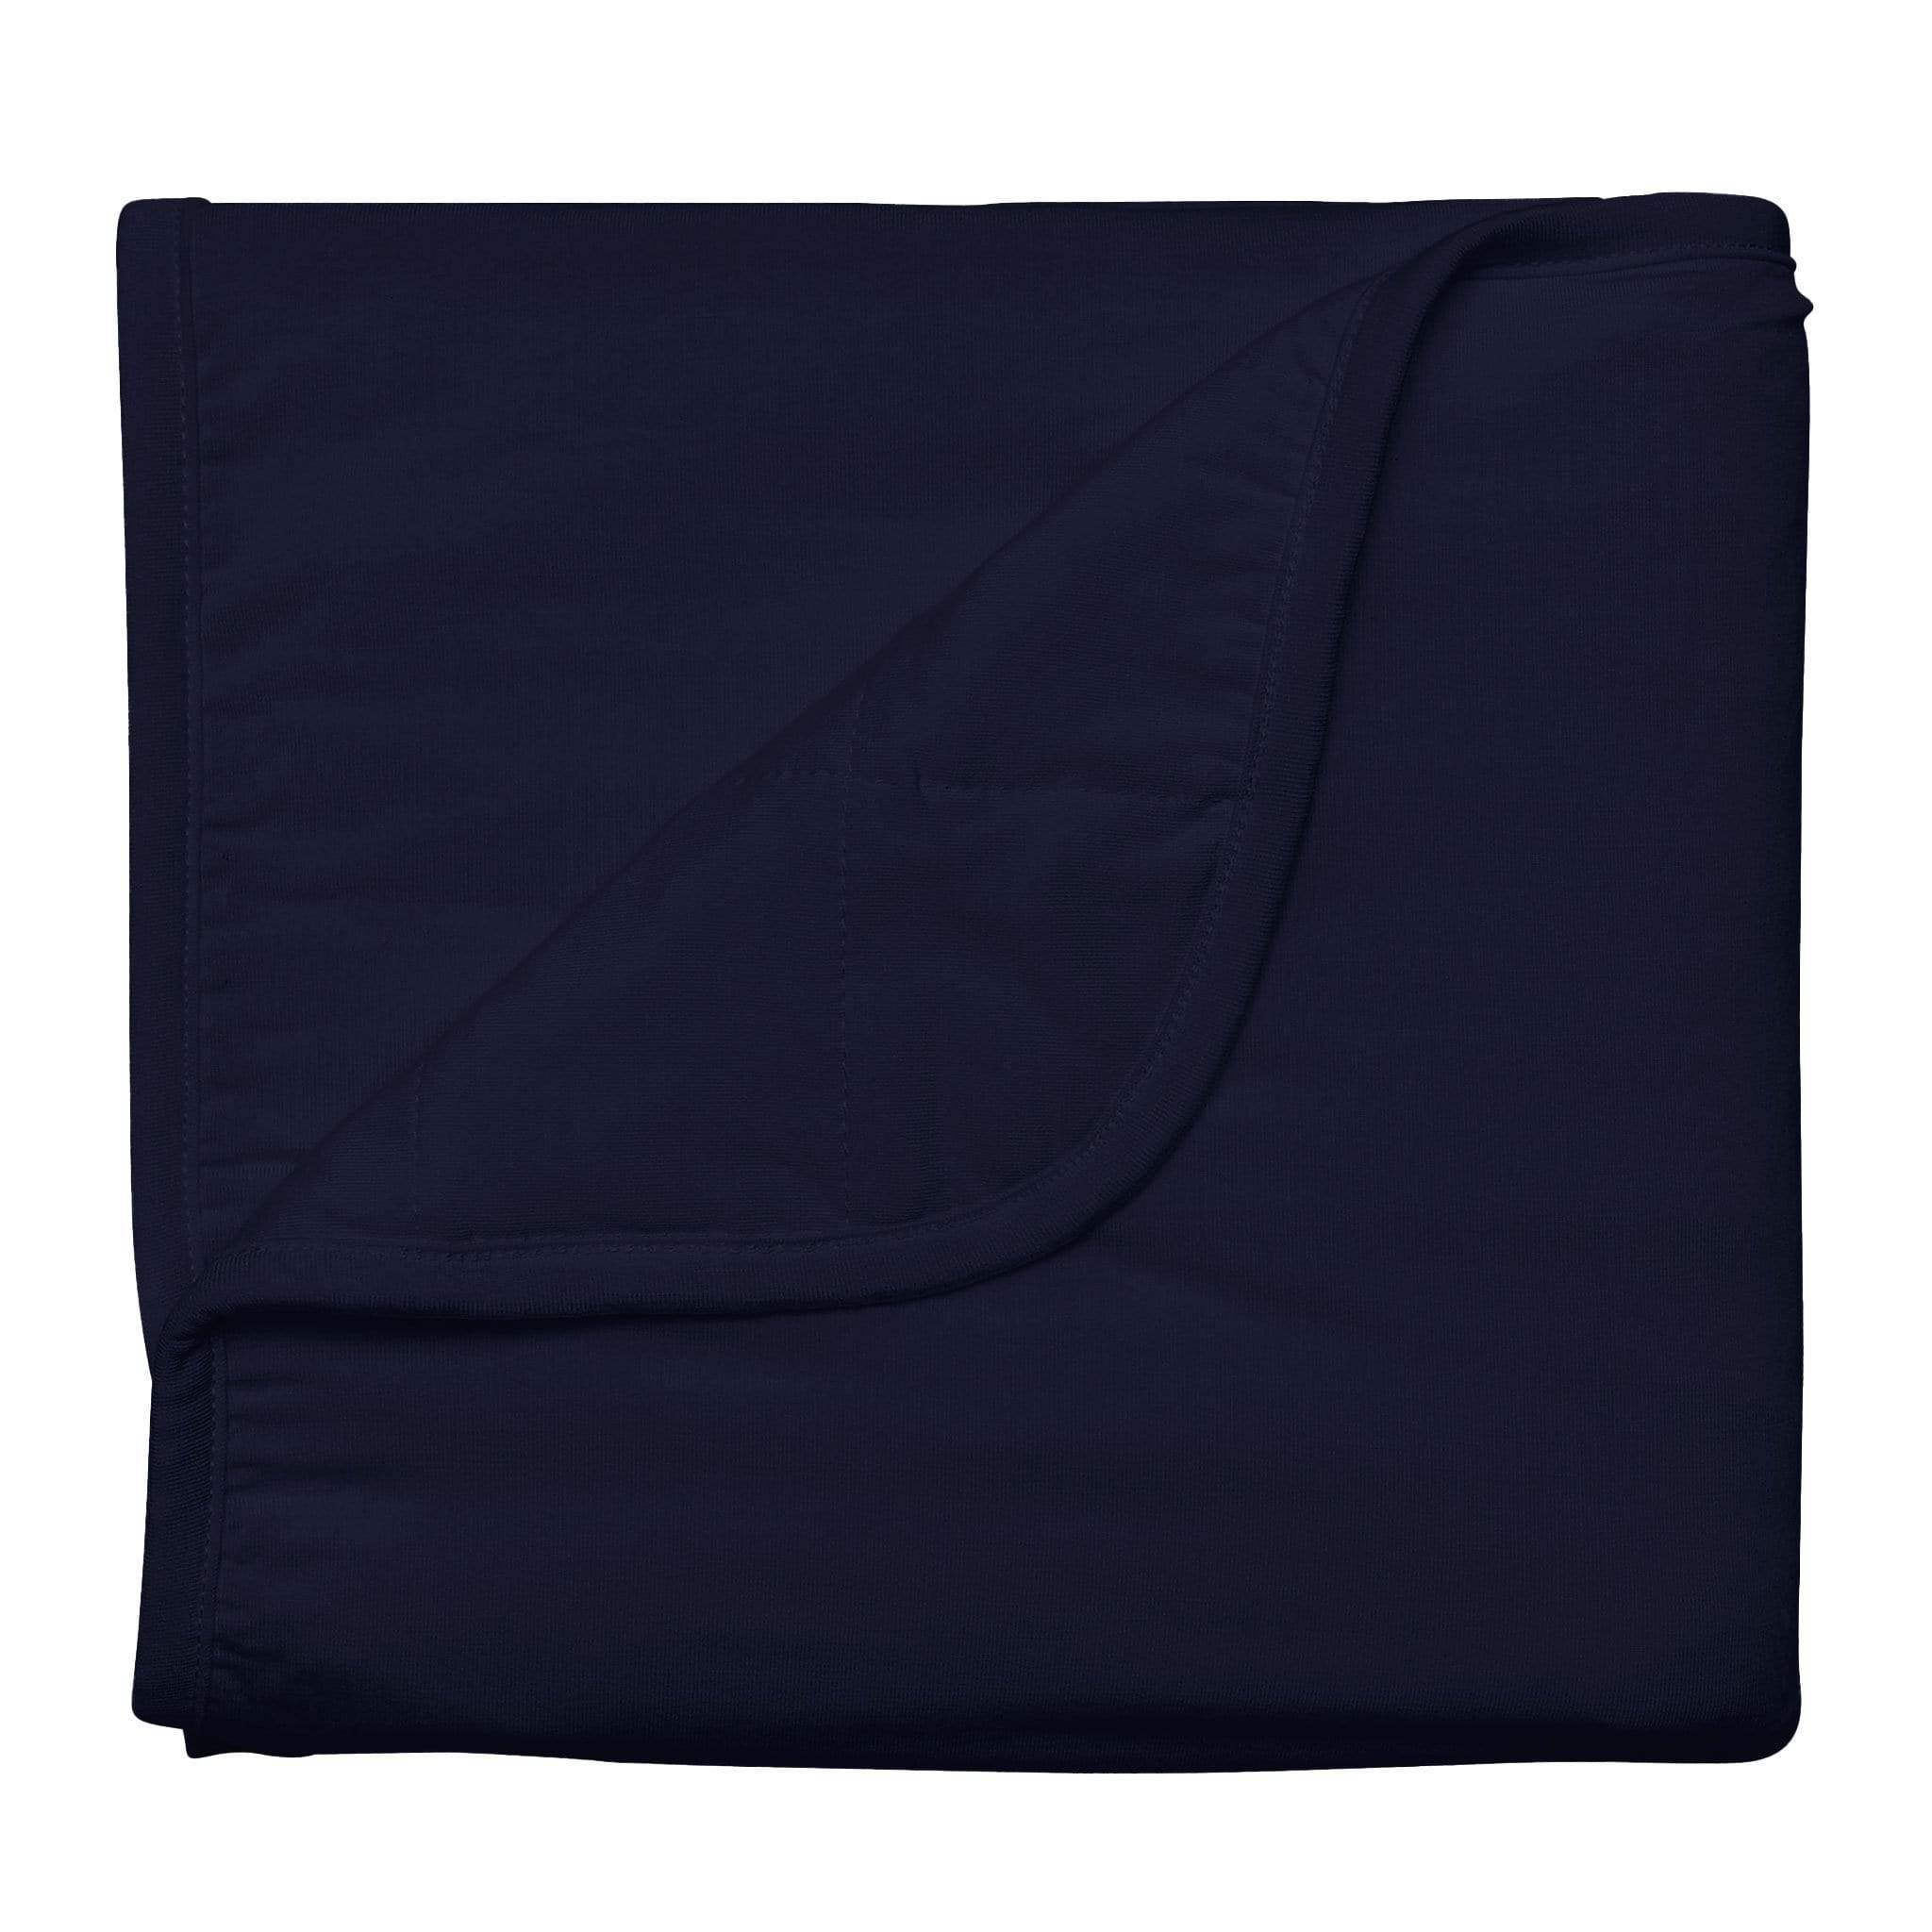 Kyte BABY Blanket Navy / Infant / 1.0 Tog Baby Blanket in Navy